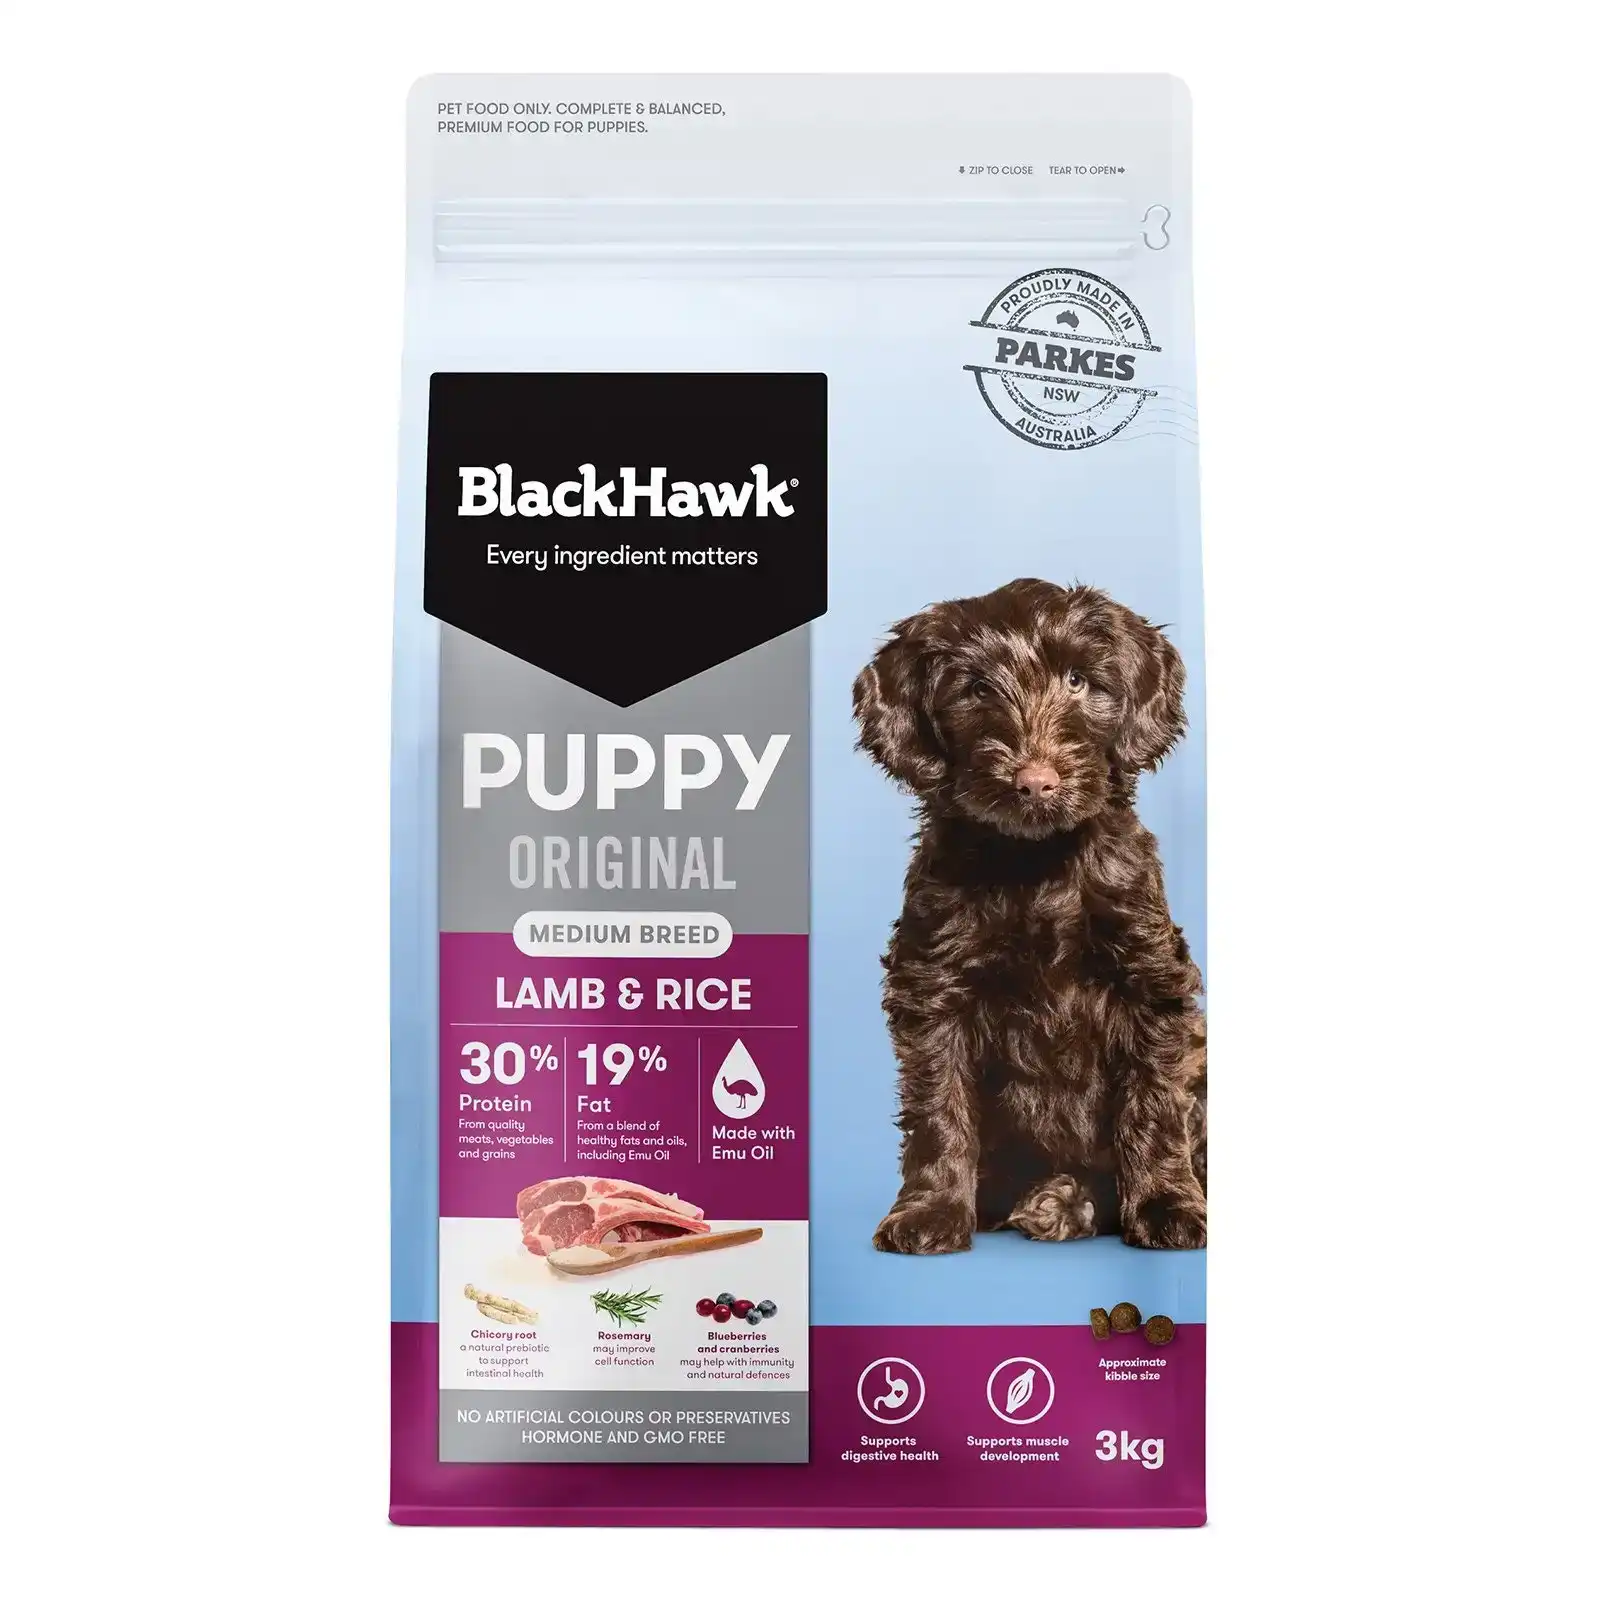 BlackHawk Puppy Medium Breed Original Lamb And Rice Dry Dog Food 10 Kg